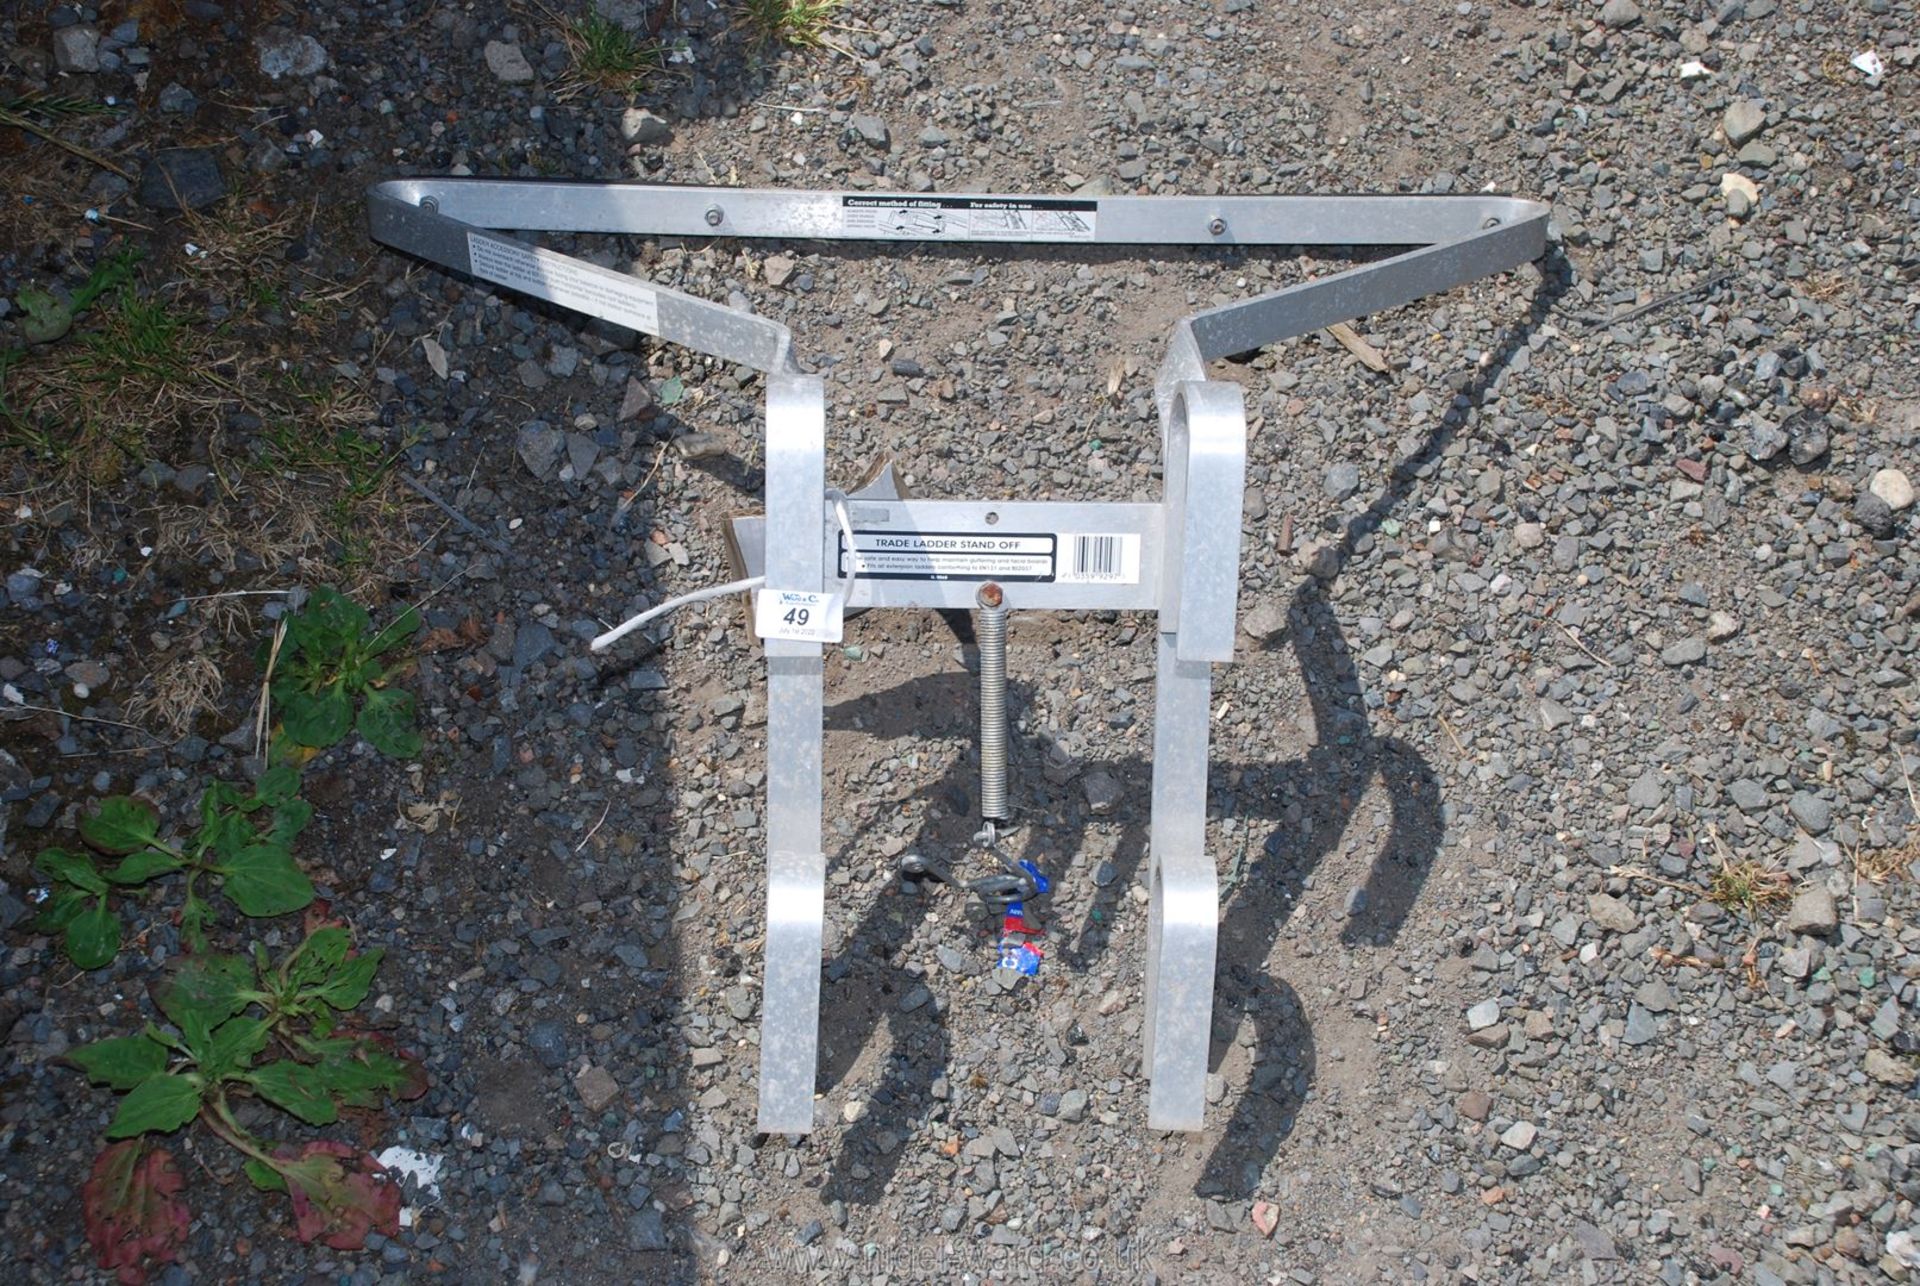 A metal ladder stand off